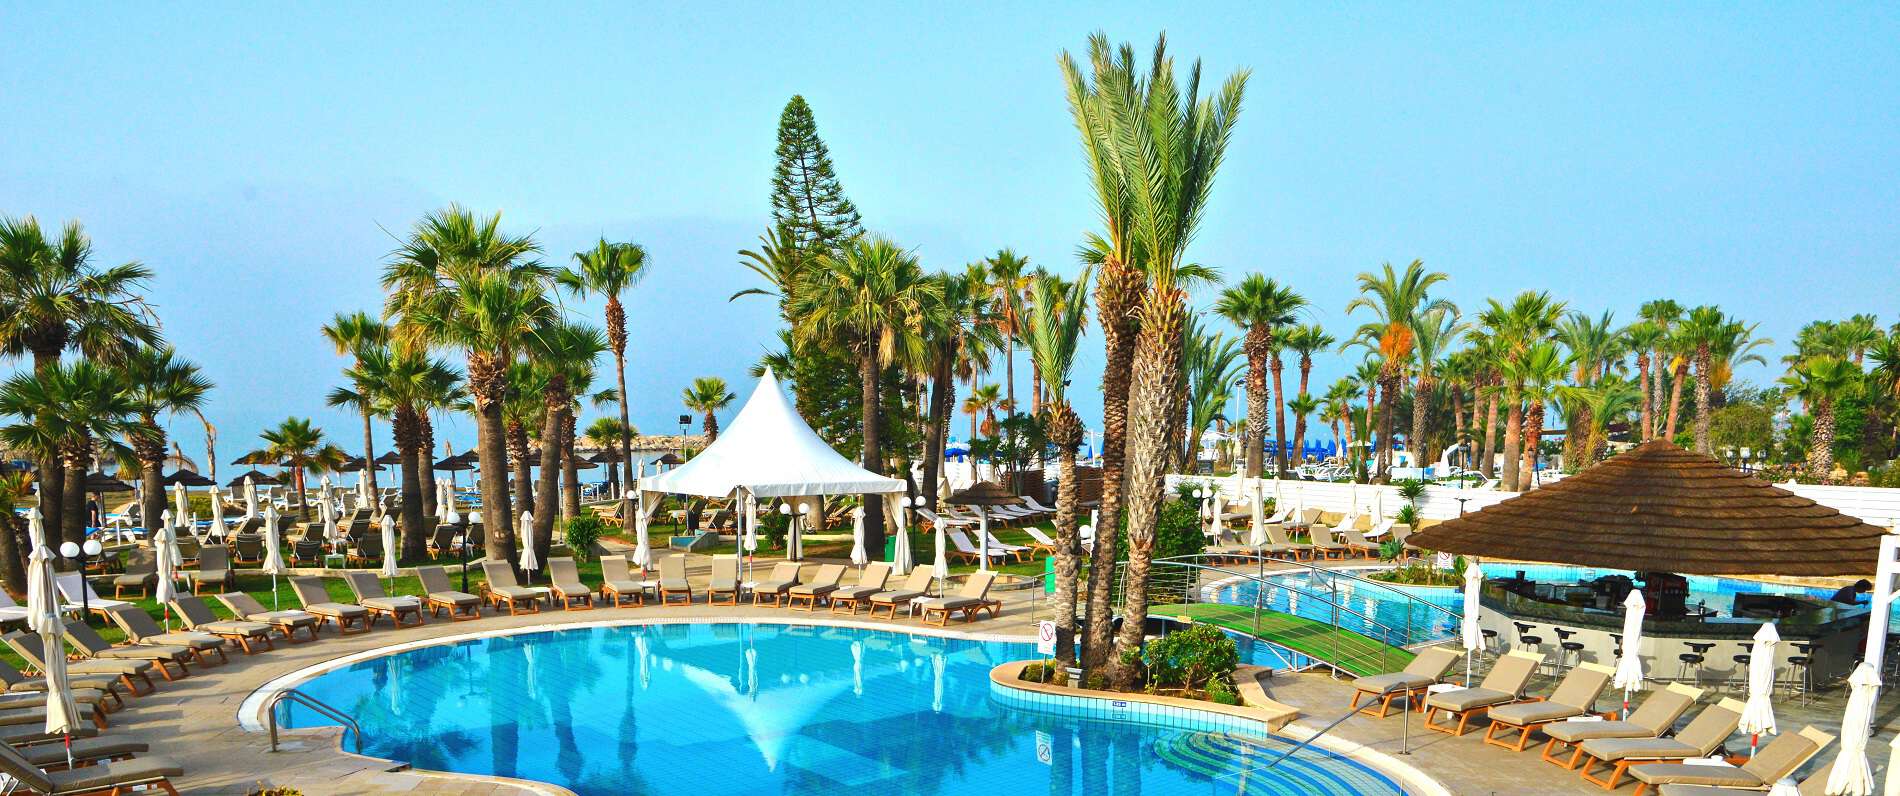 Goldeb Bay Beach Hotel pool - Golden Bay Beach Hotel